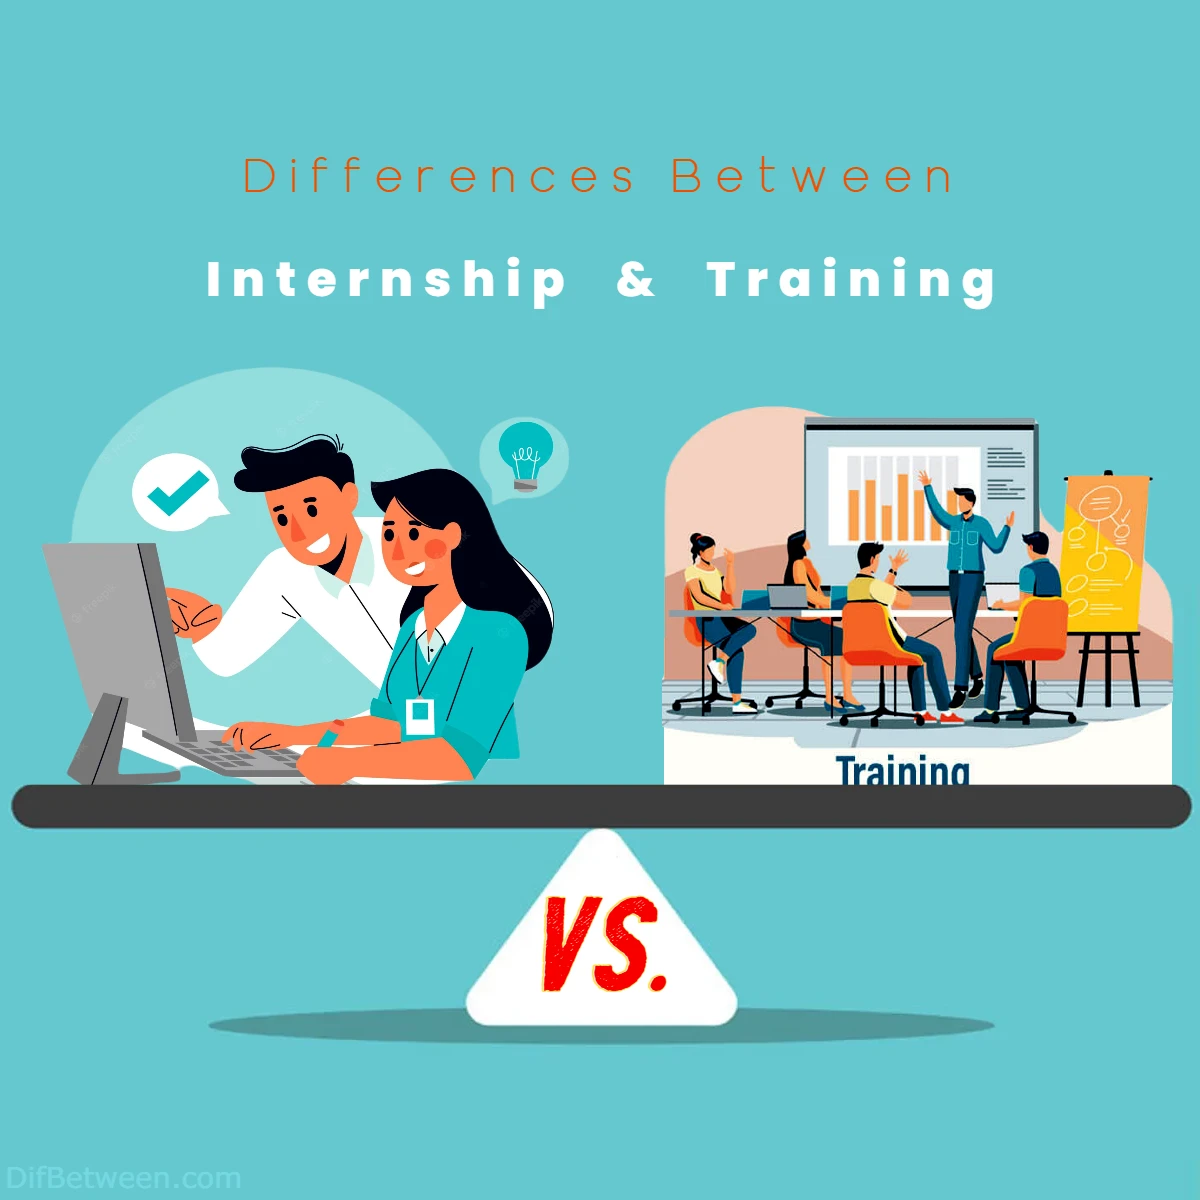 Differences Between Internship vs Training